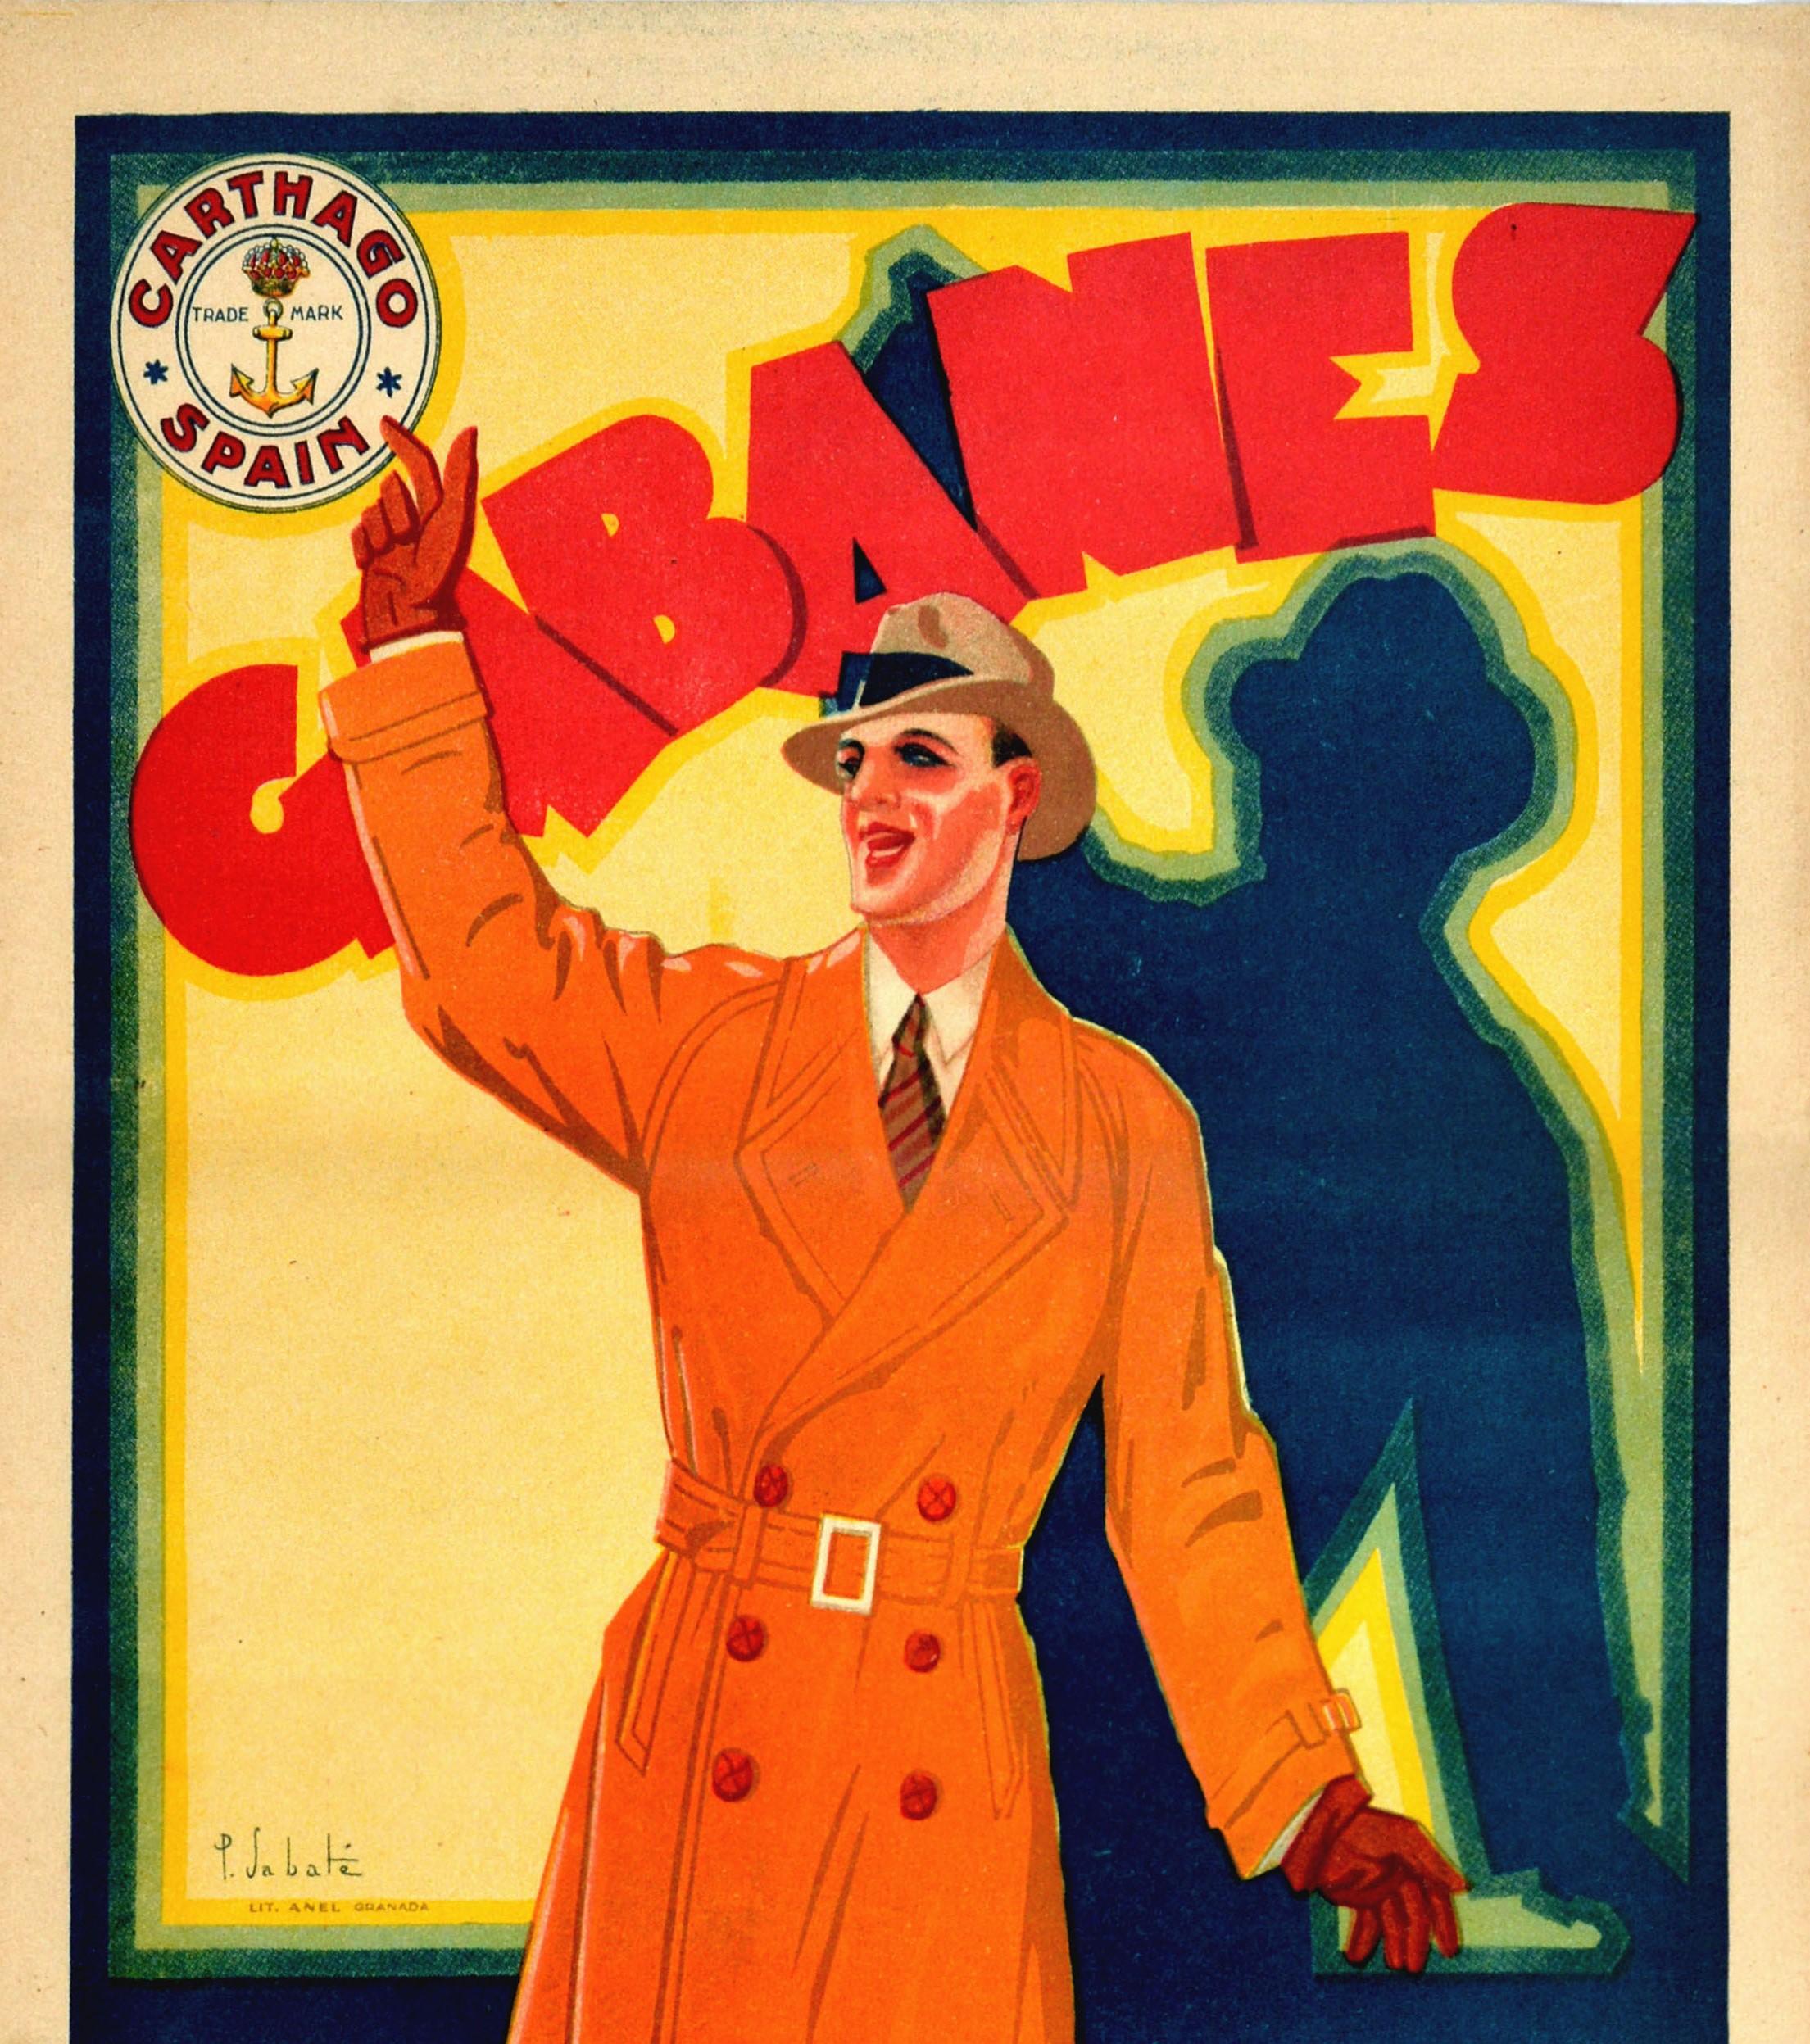 Original Vintage Poster Cabanes Carthago Hats Men's Fashion Exhibition And Sale - Print by P. Sabate